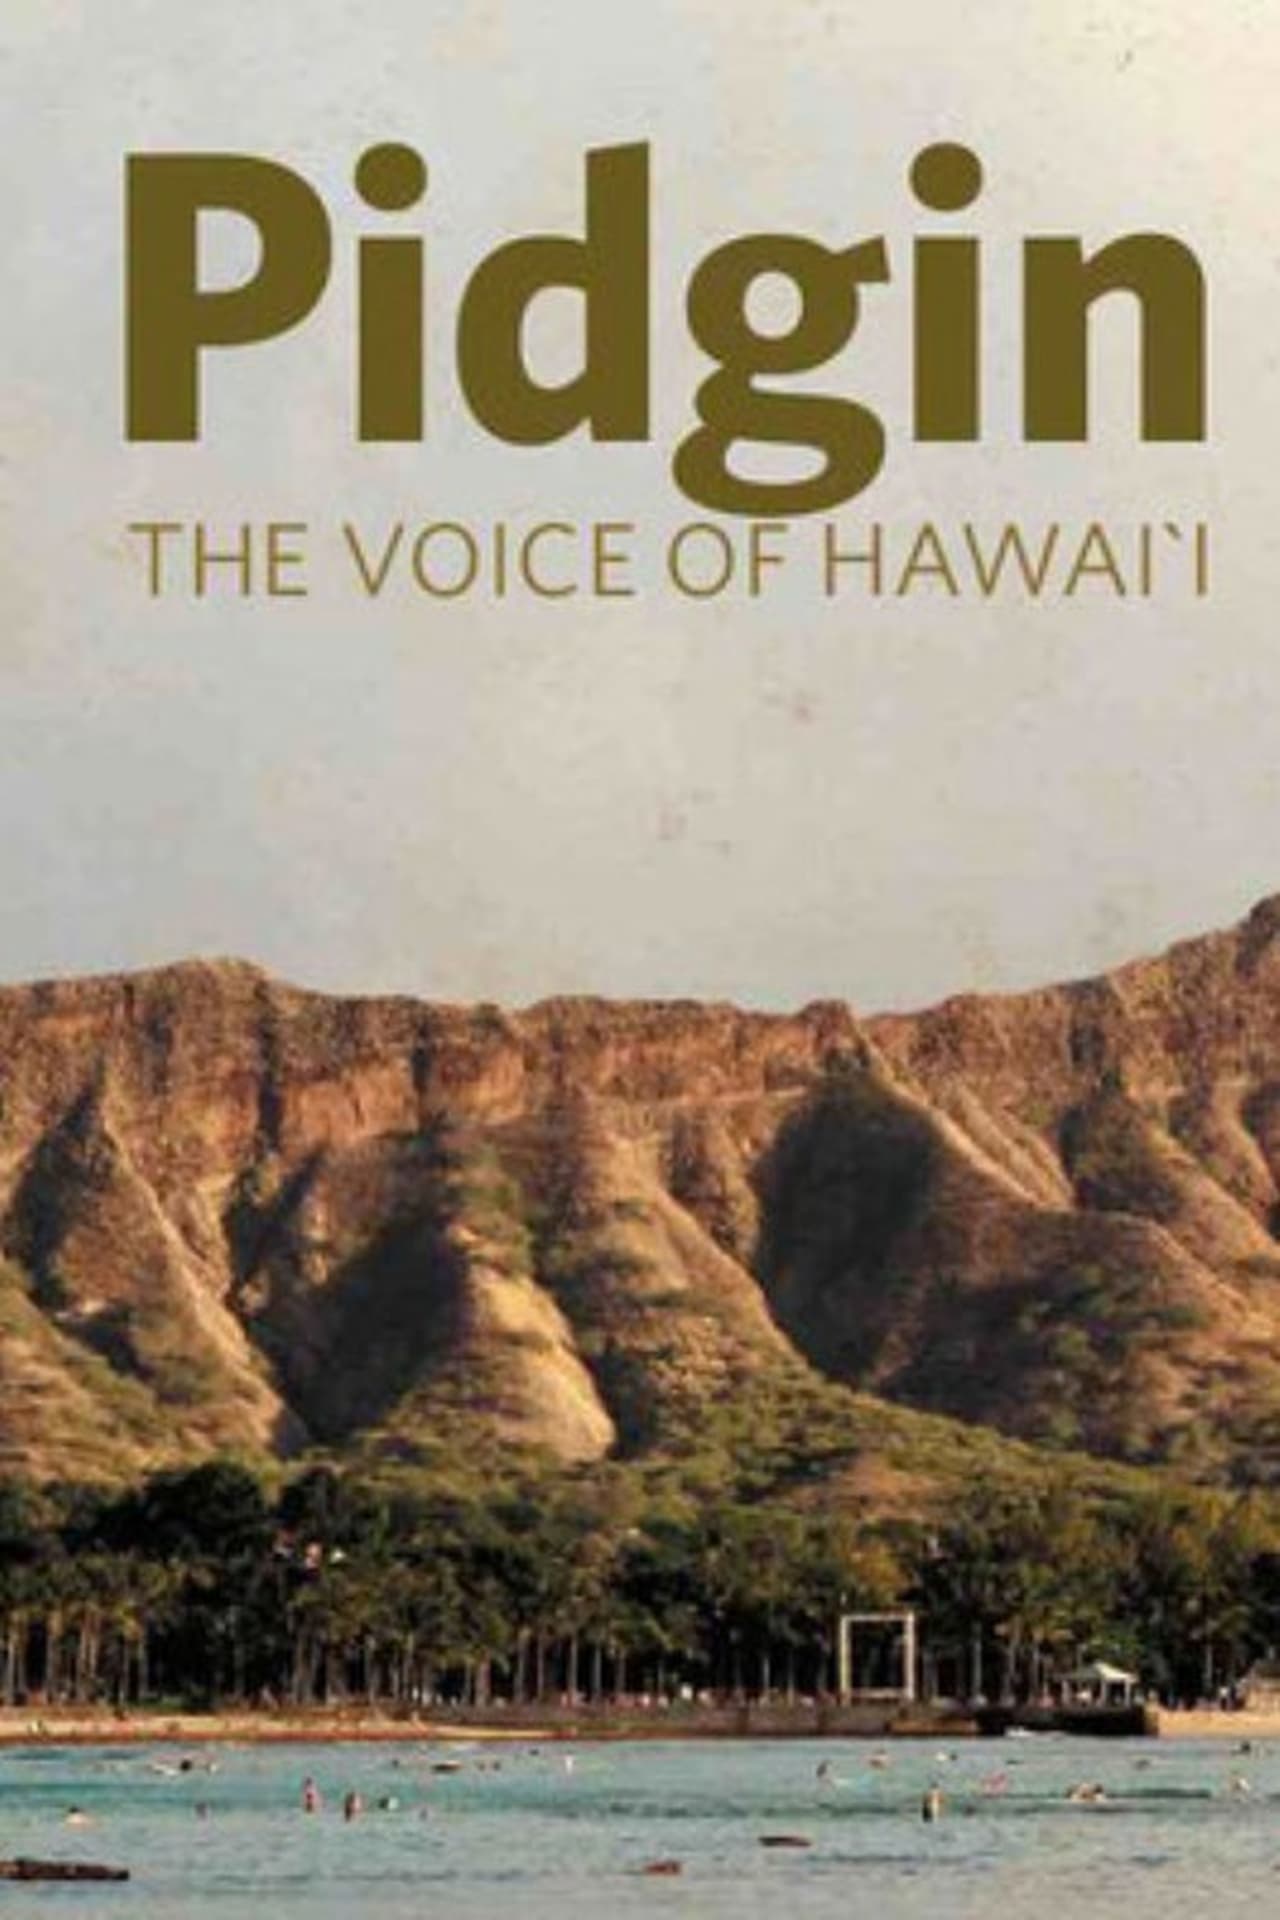 Pidgin: The Voice of Hawai'i